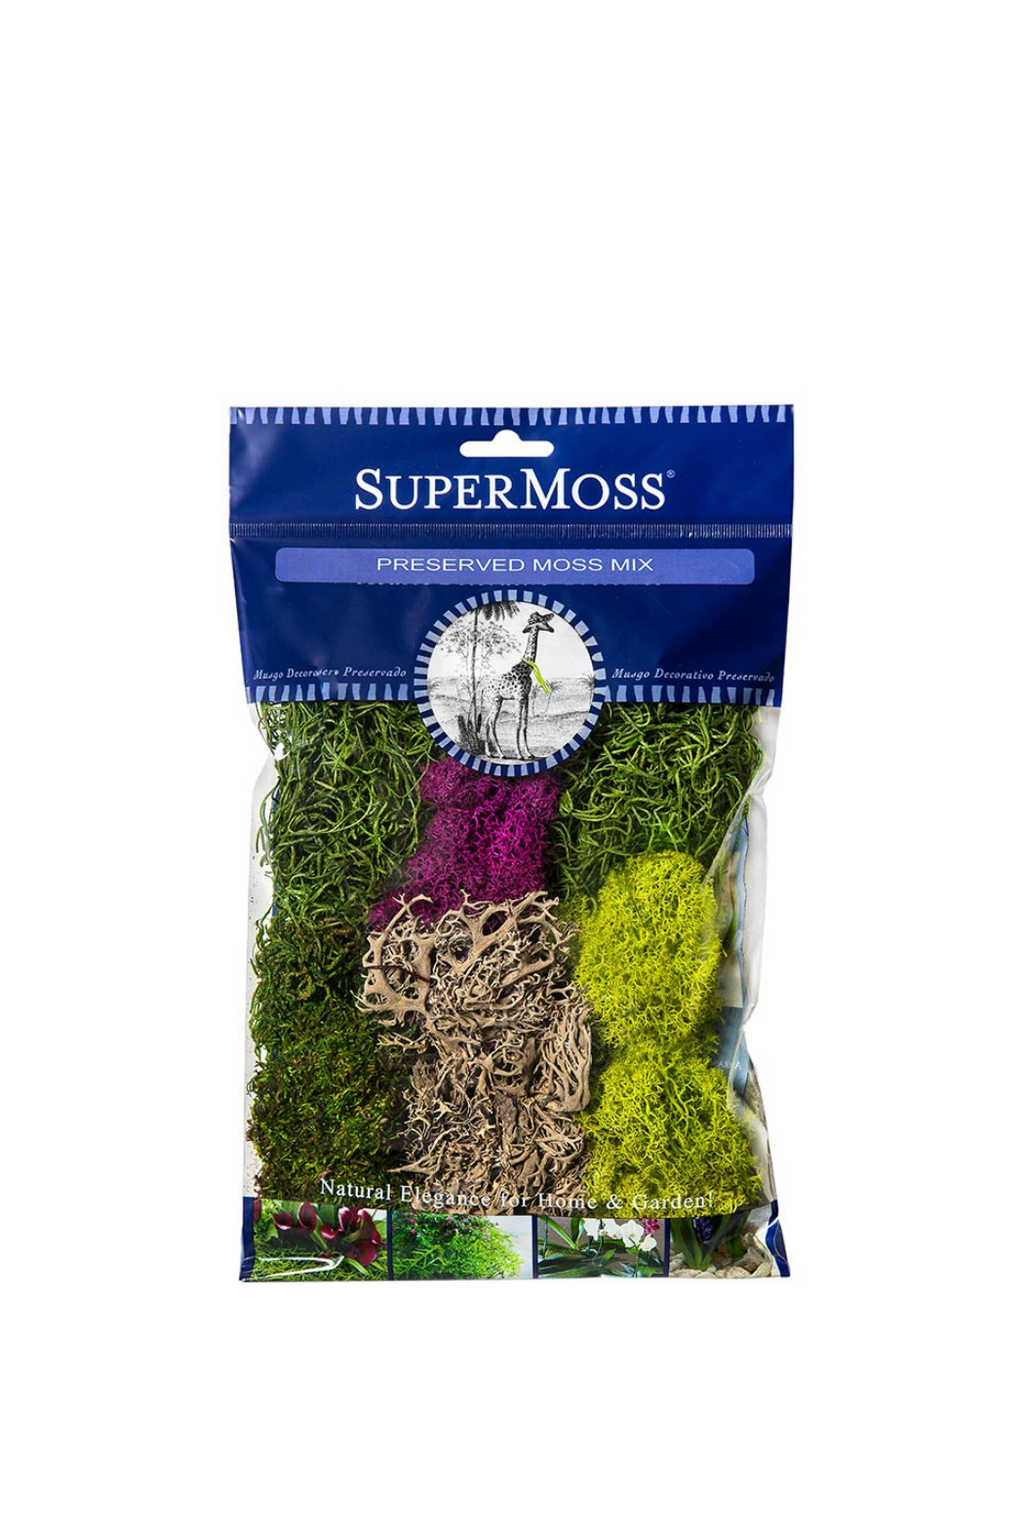 Natural Sheet Moss 2oz Bag by Quick Candles